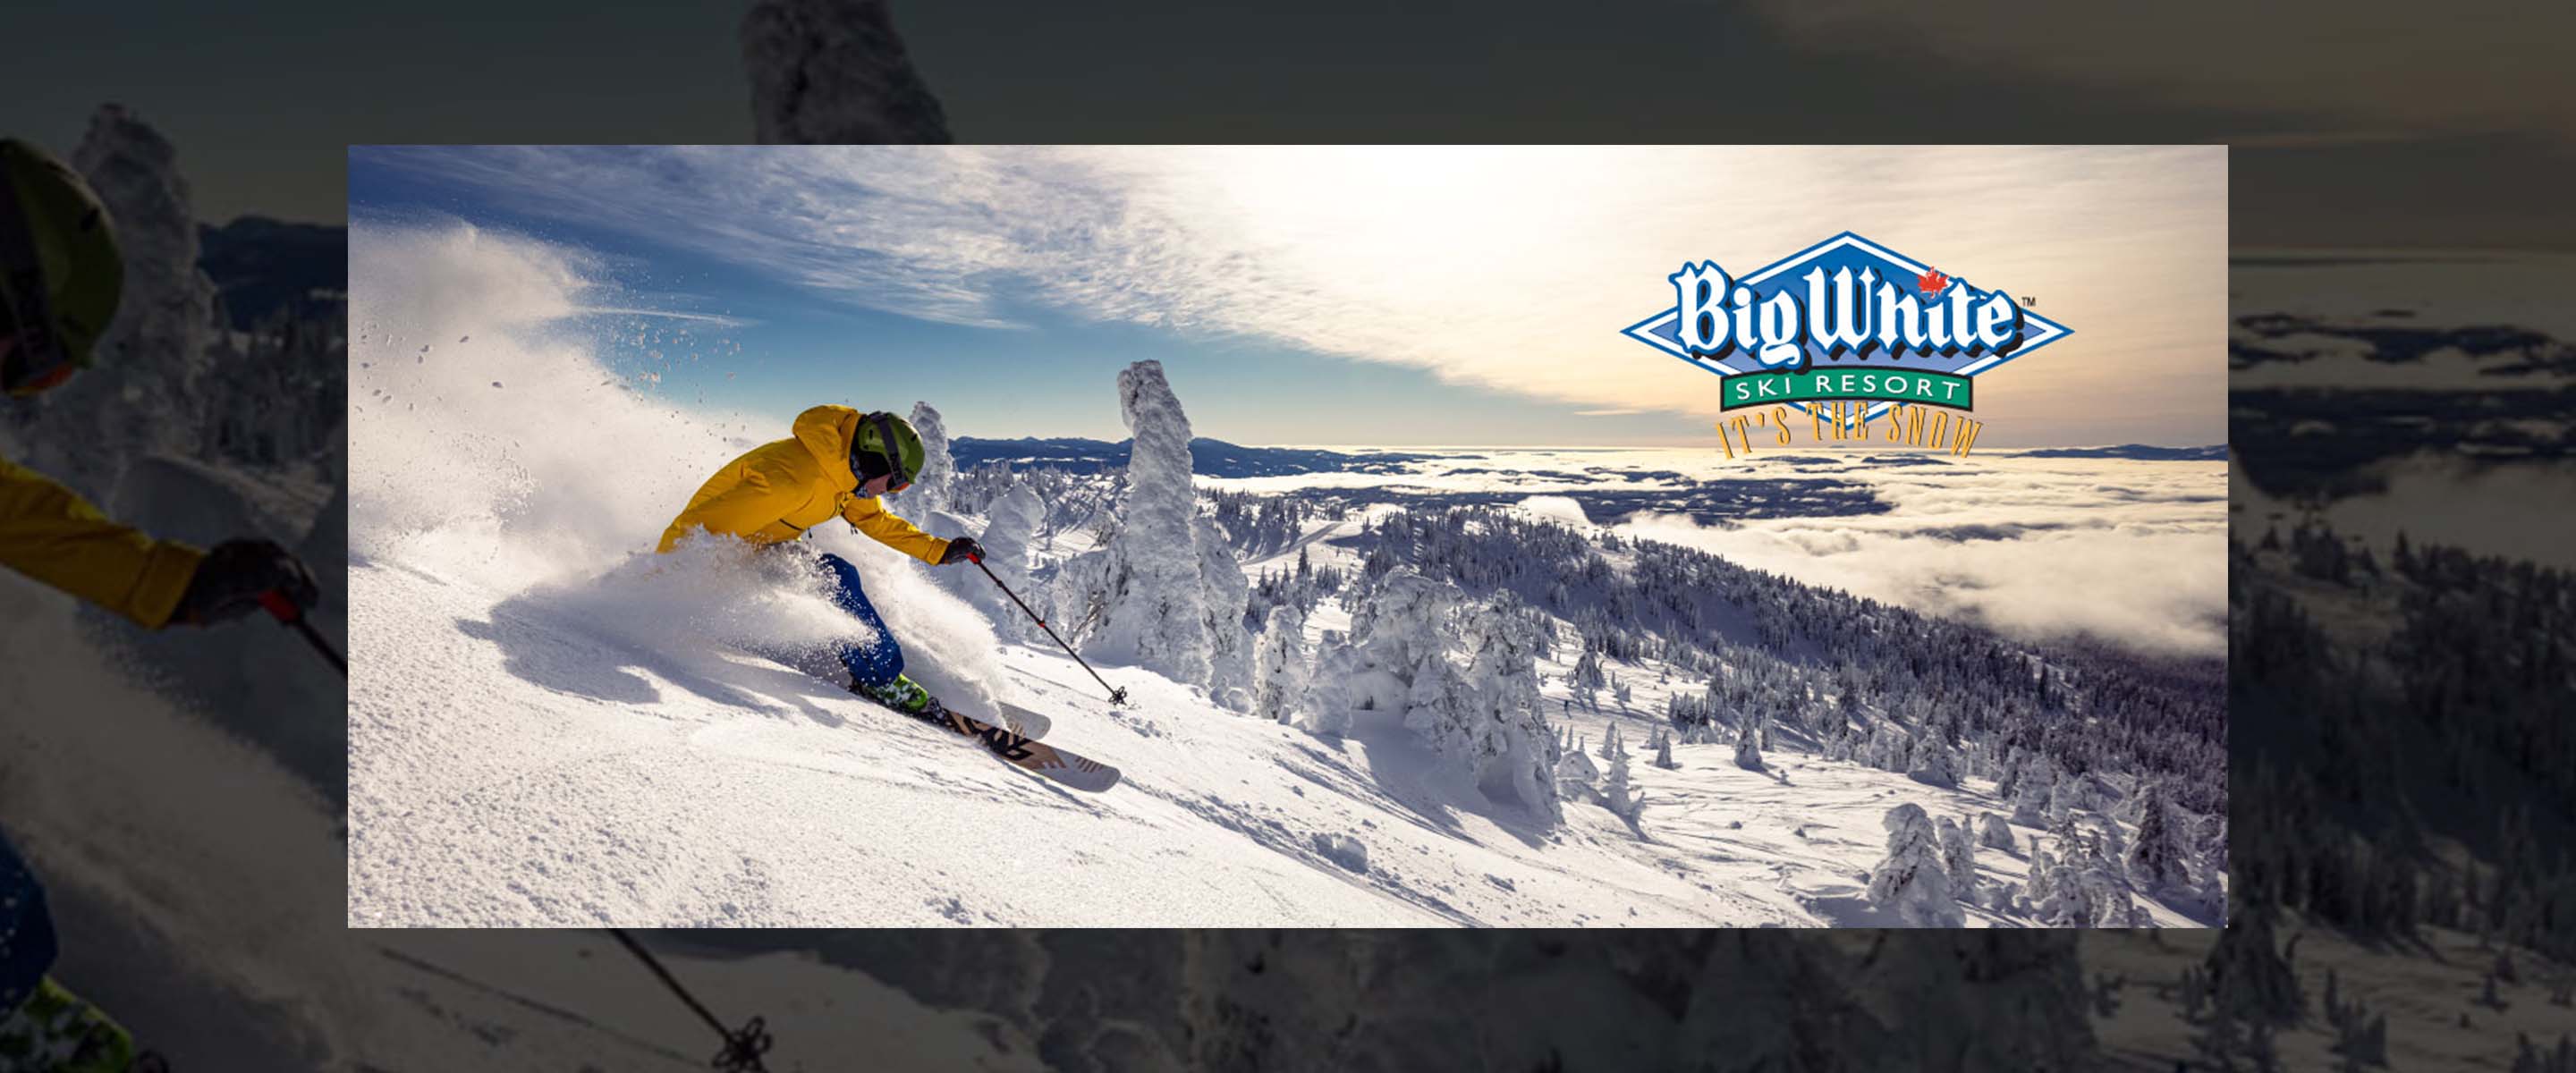 Daily Snow Report  Big White Ski Resort Ltd.